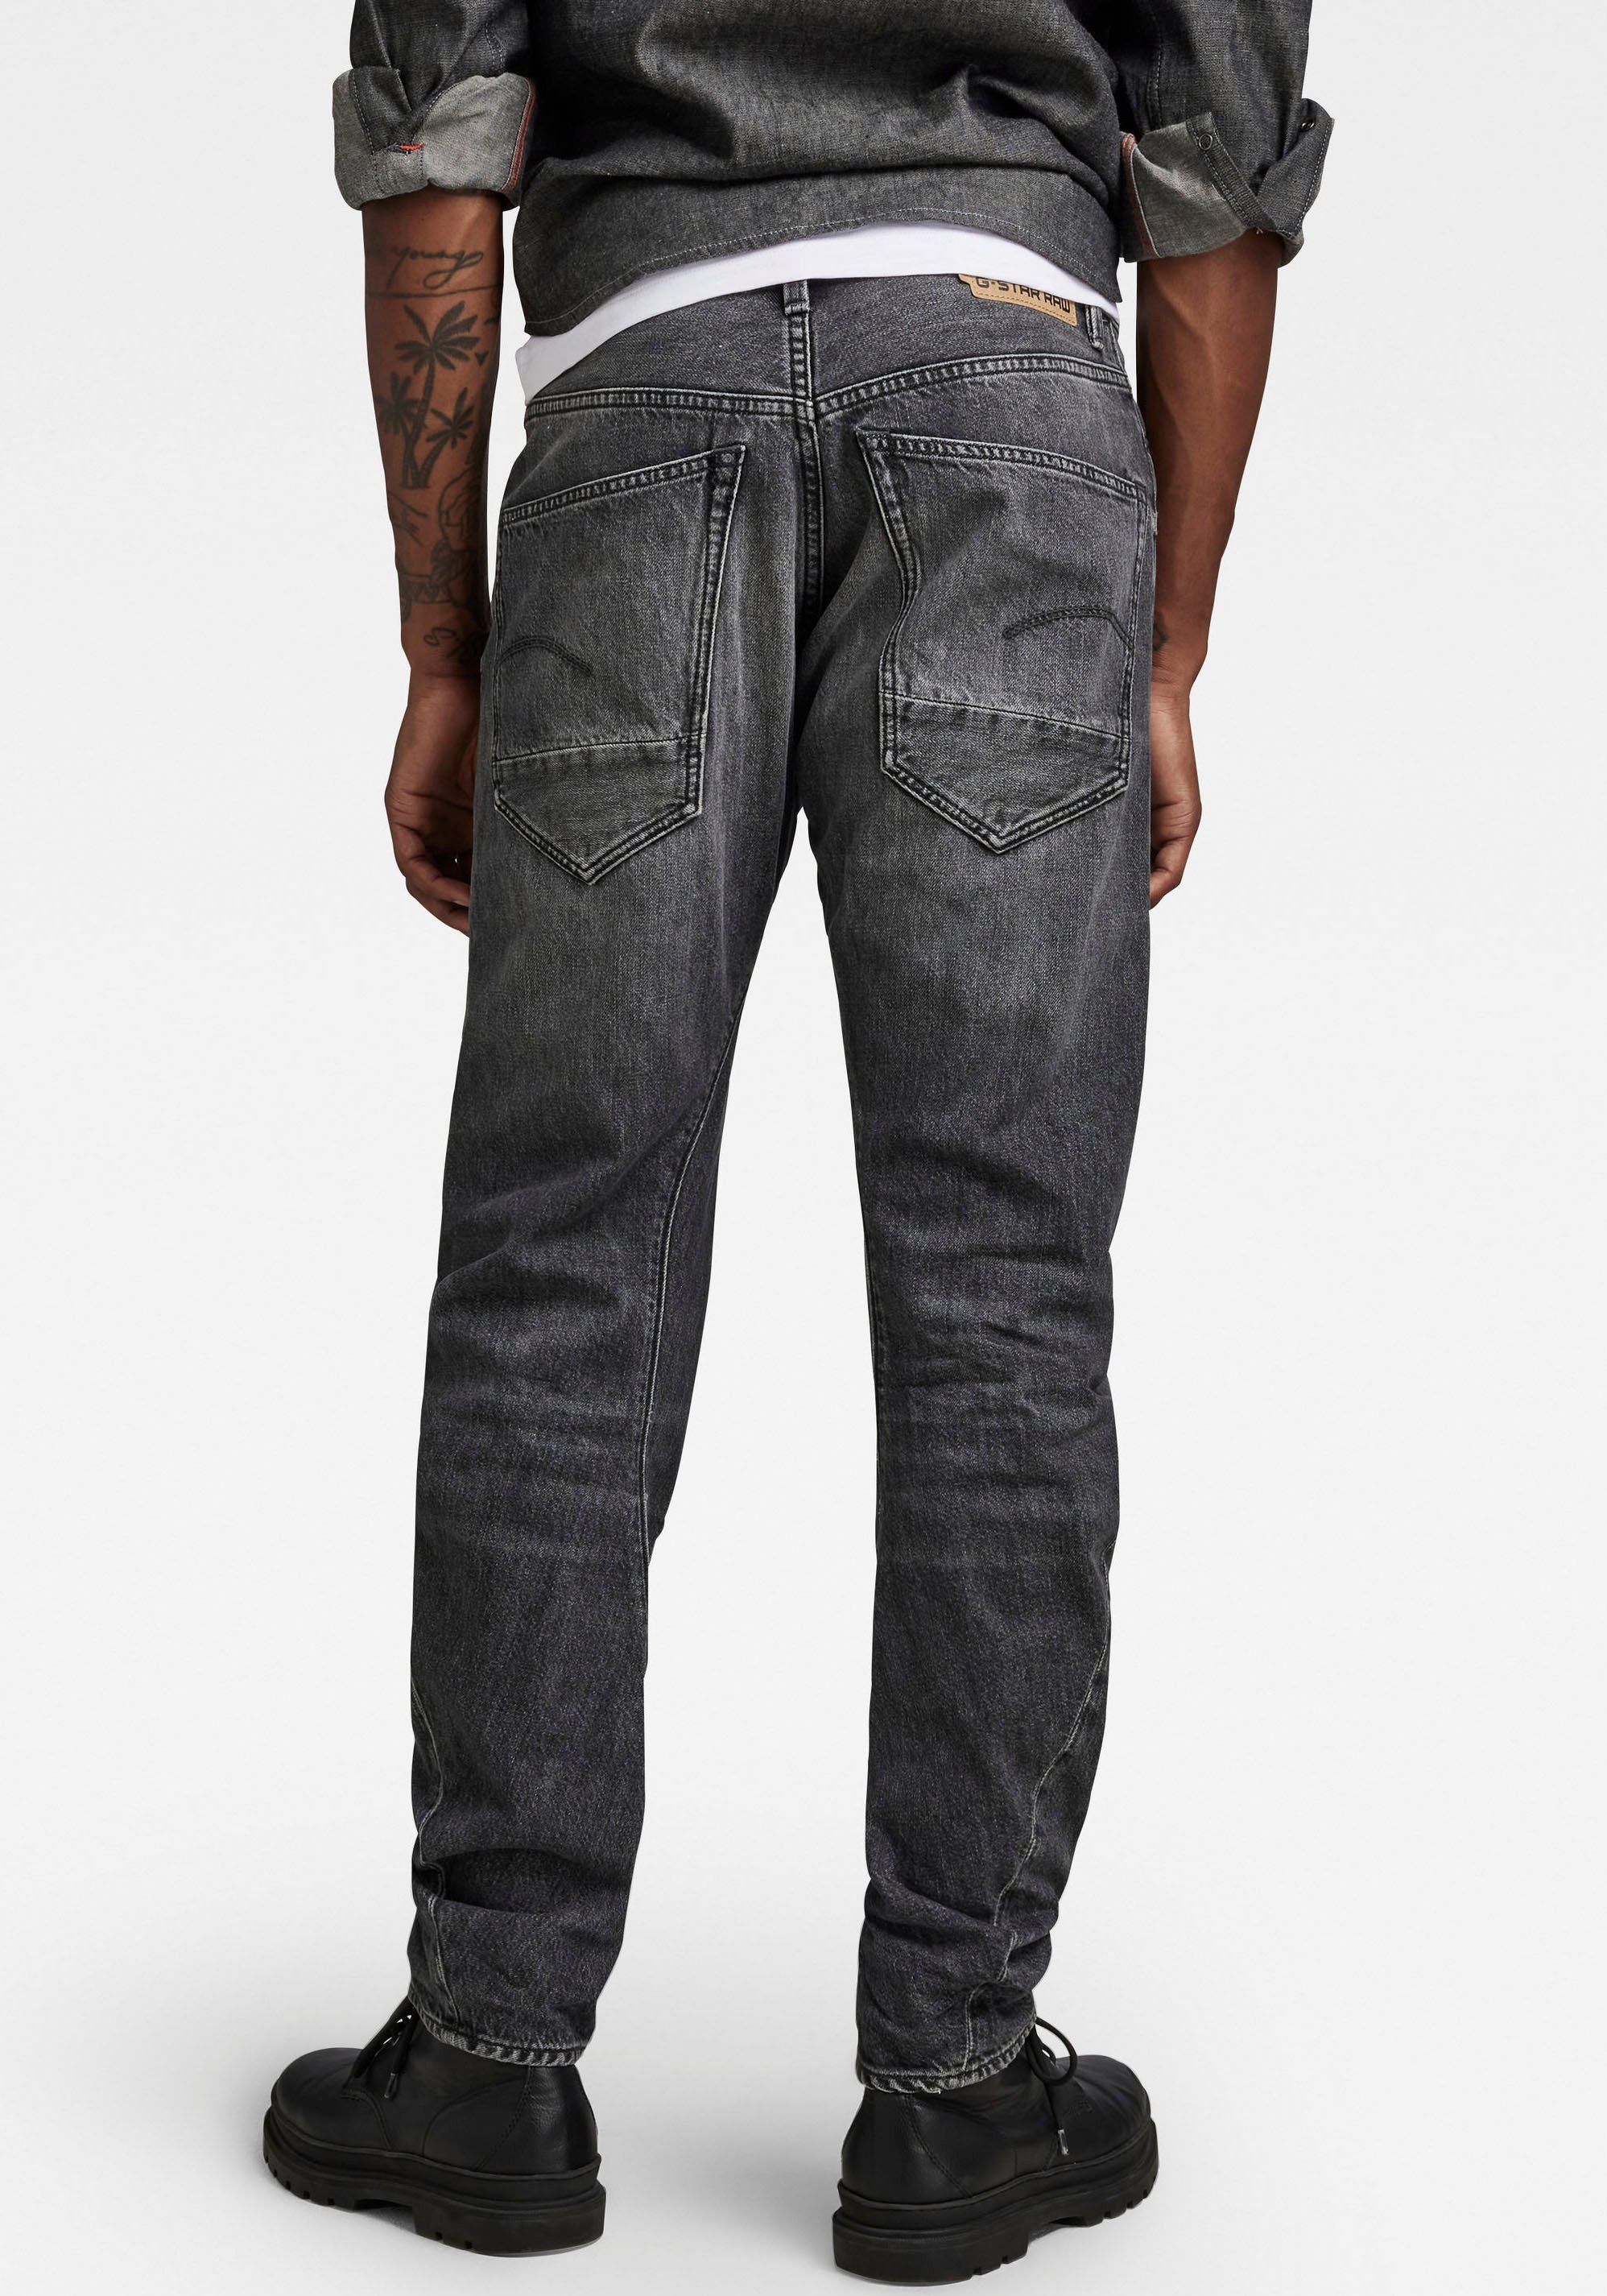 Arc moonlit Jeans RAW G-Star 3D Antique Slim-fit-Jeans faded